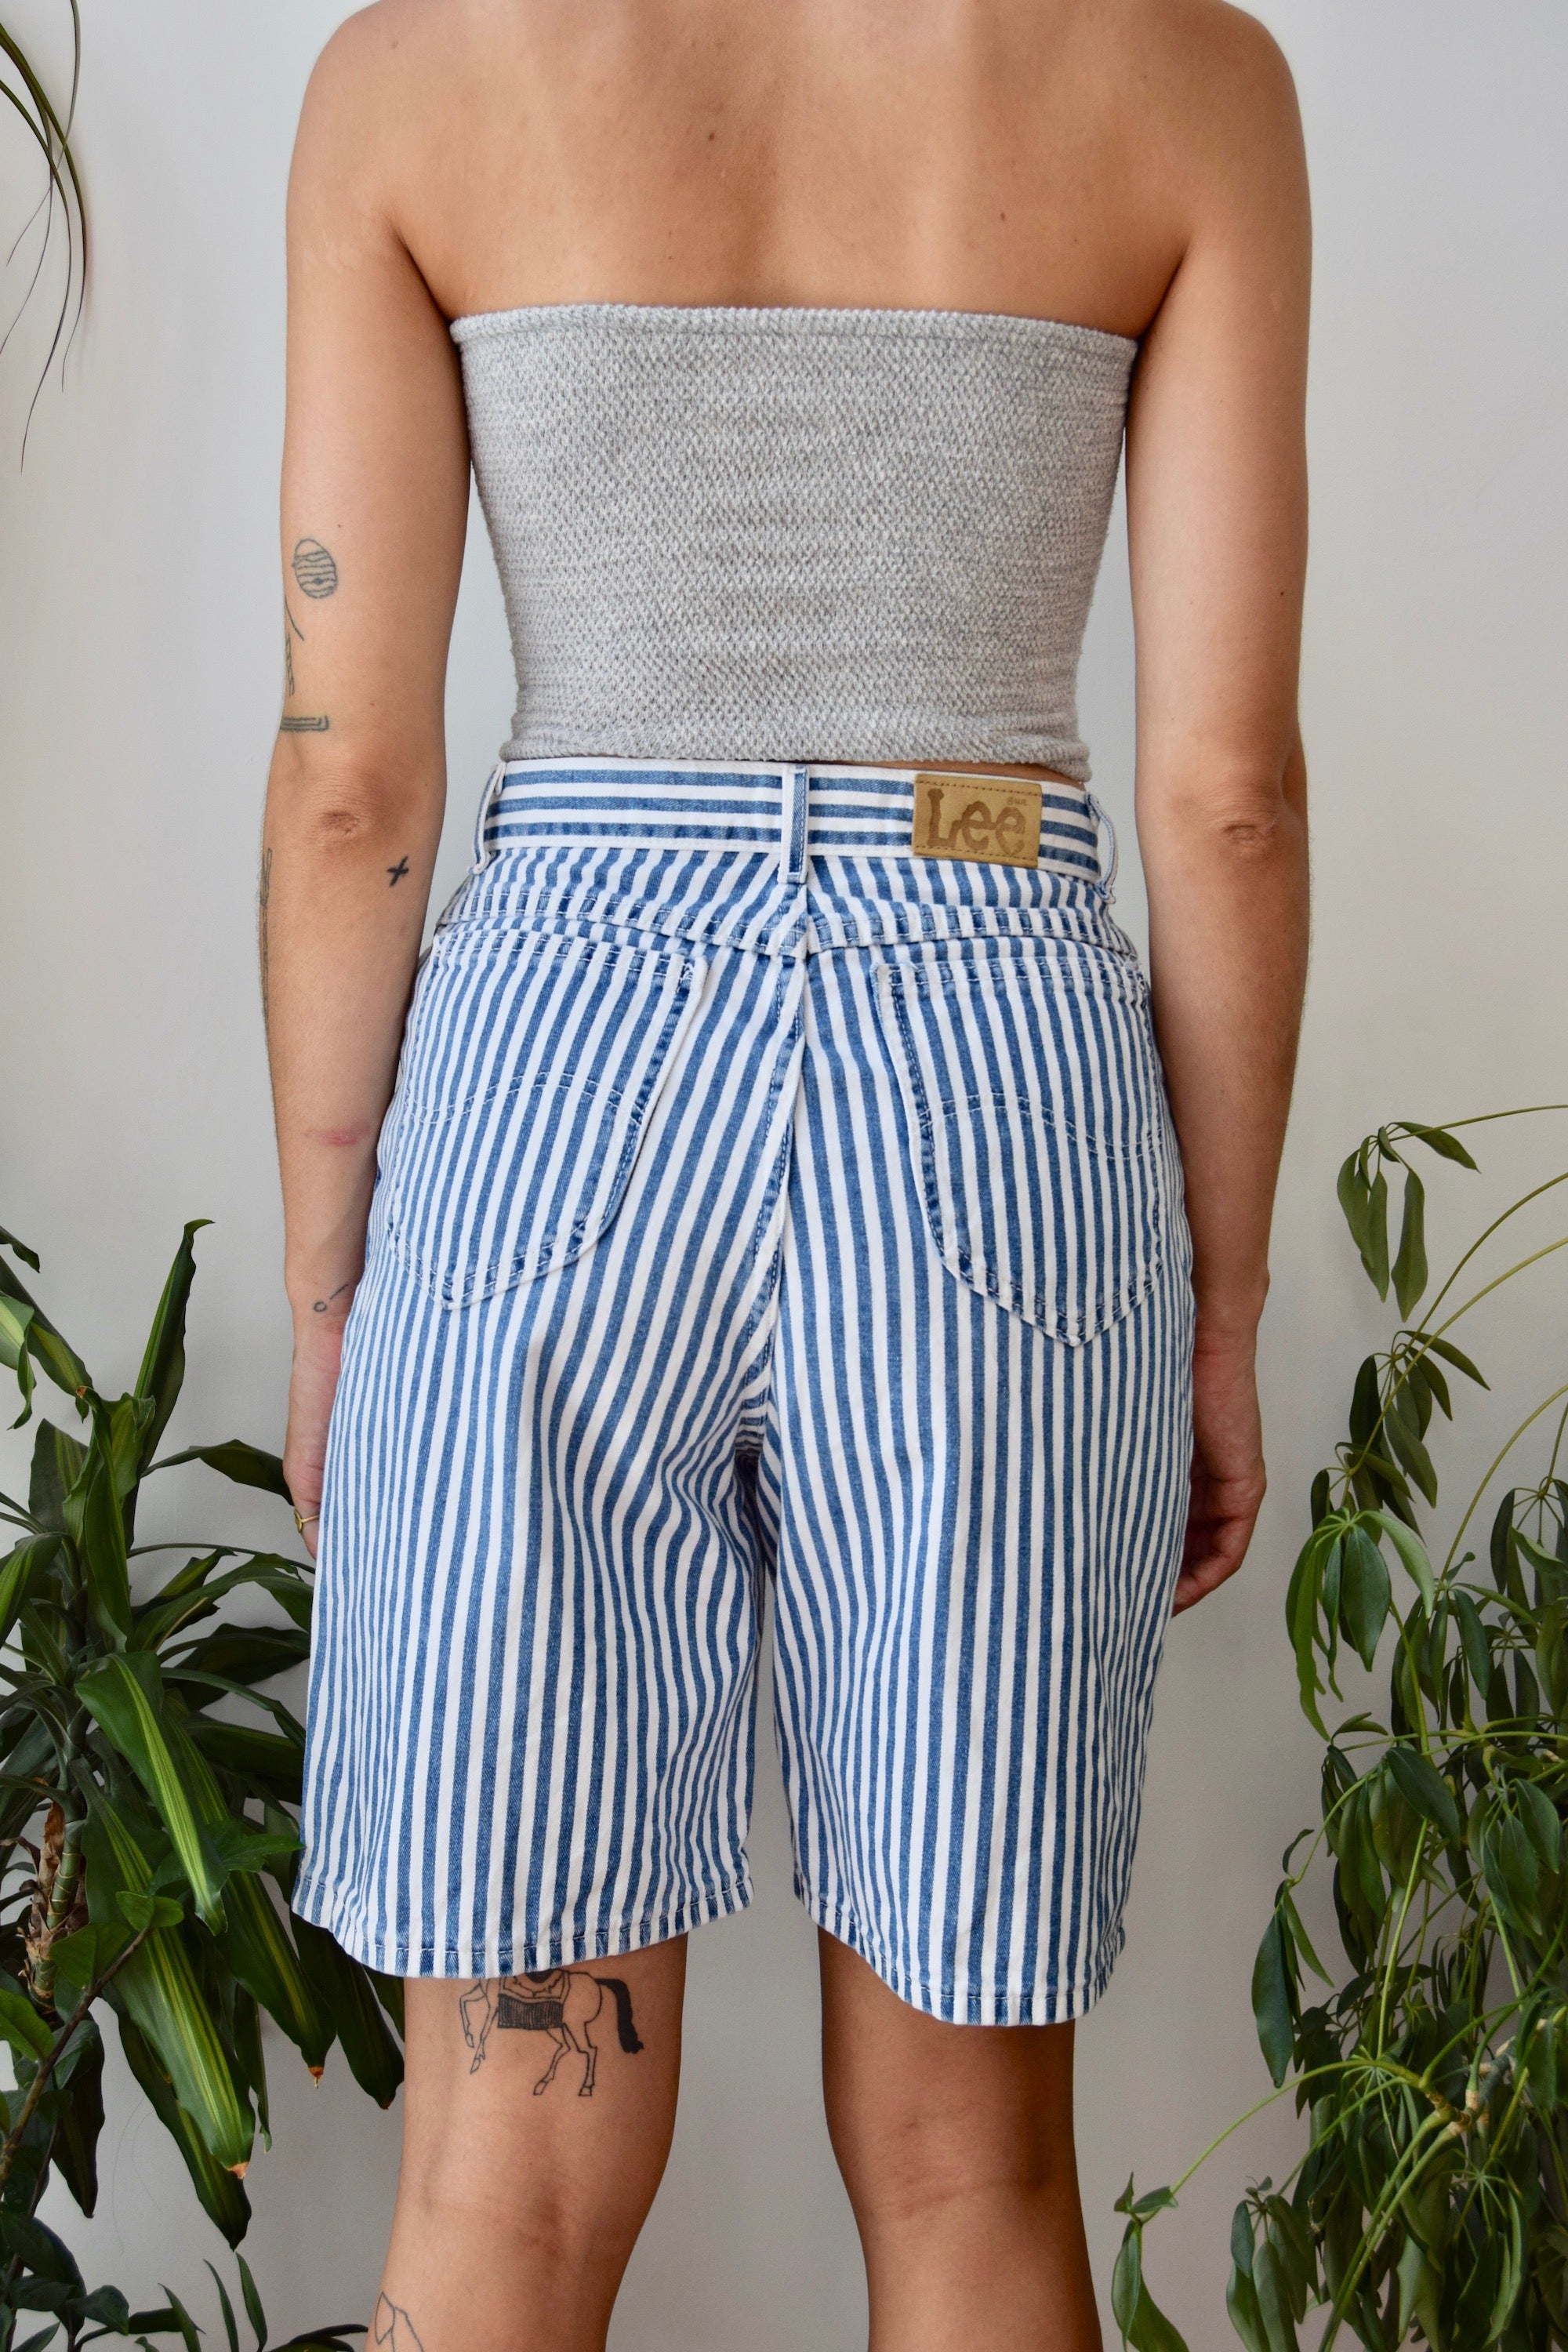 Hickory Stripe Jean Shorts